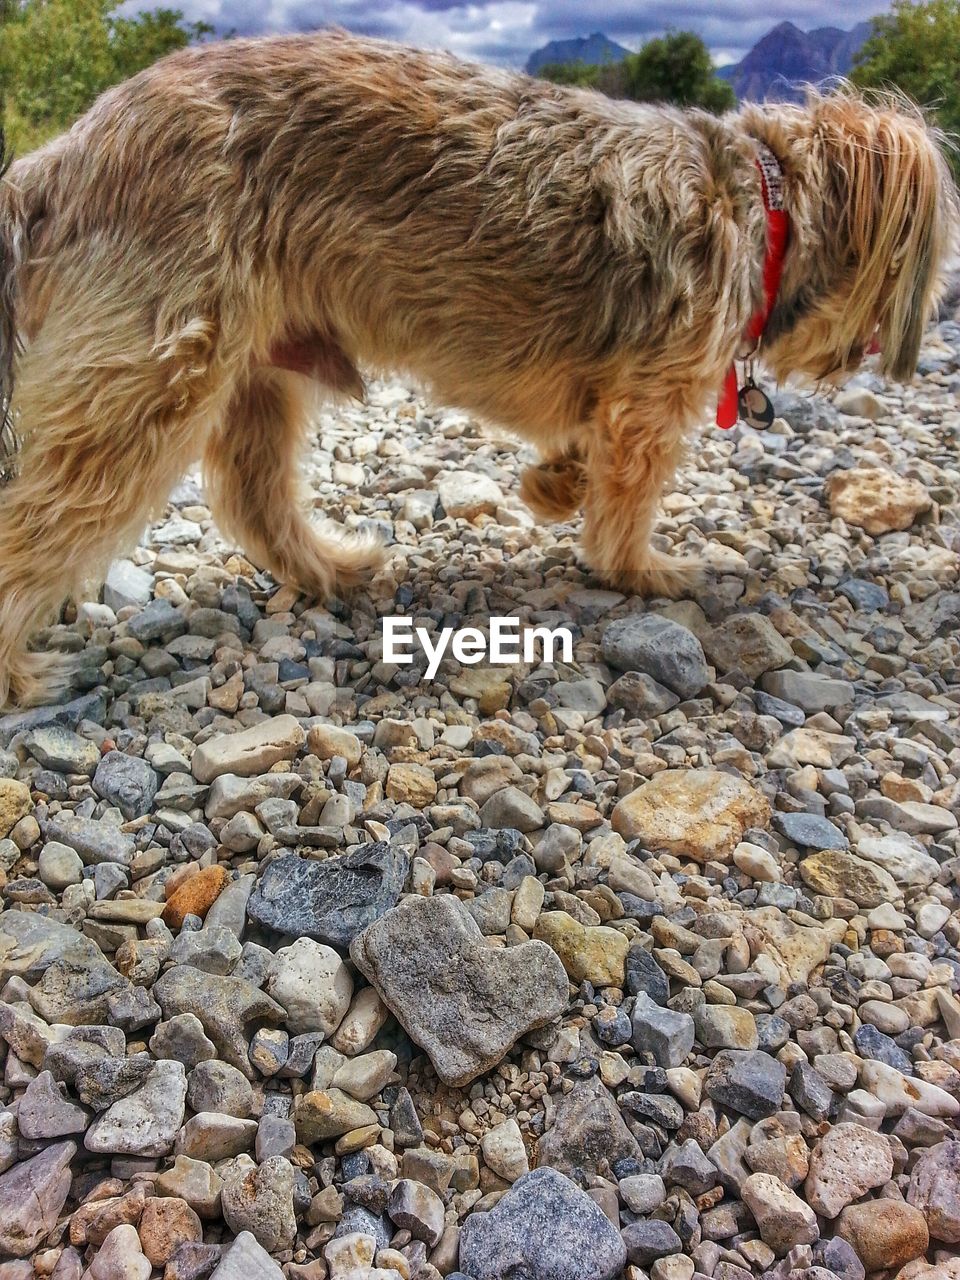 Wet dog walking on rocks